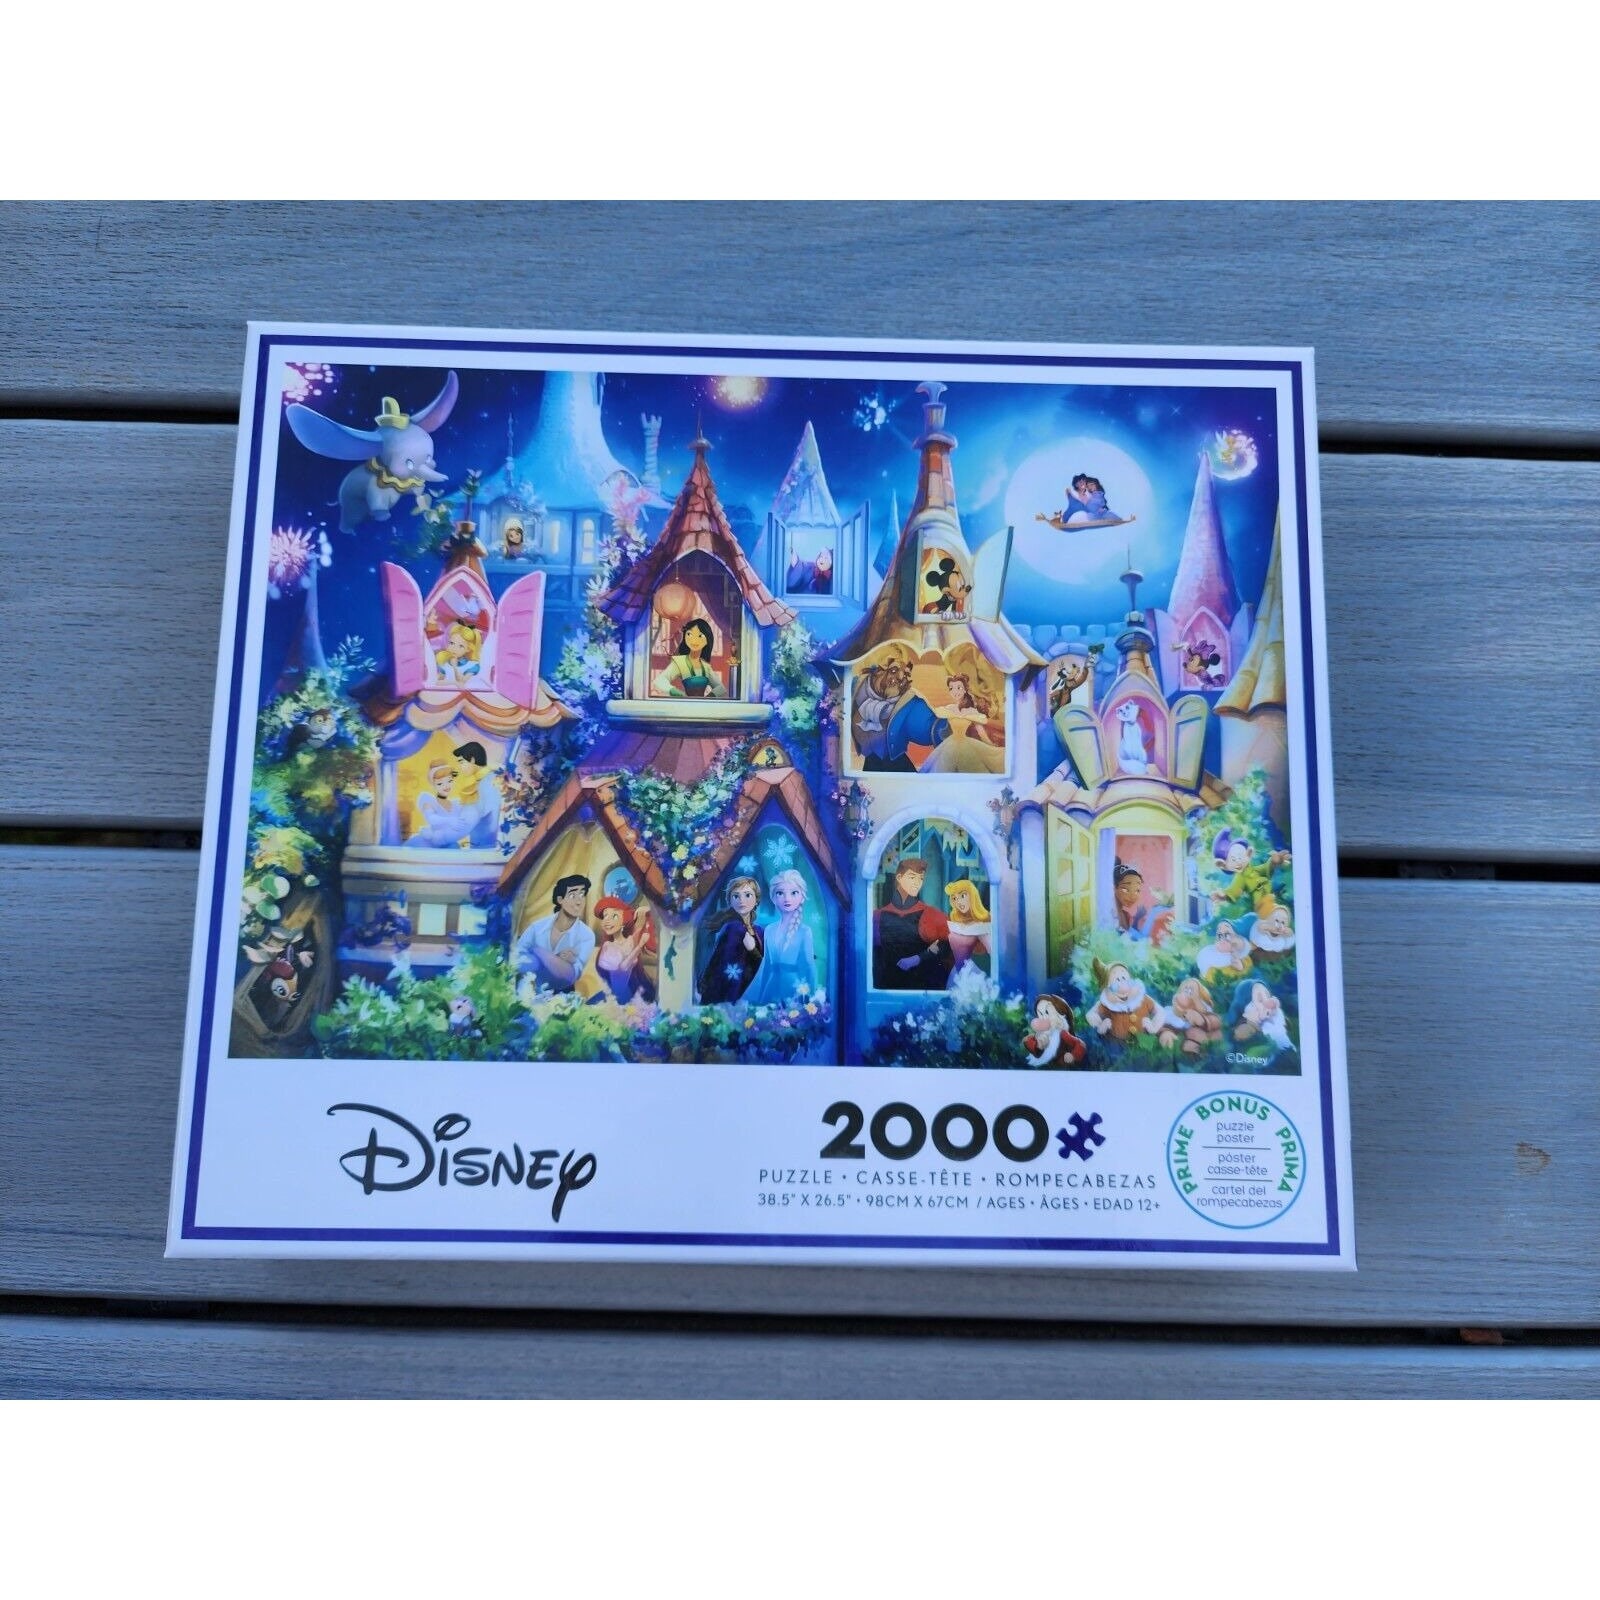 Ceaco - Disney Princess Castle - 2000 Piece Jigsaw Puzzle